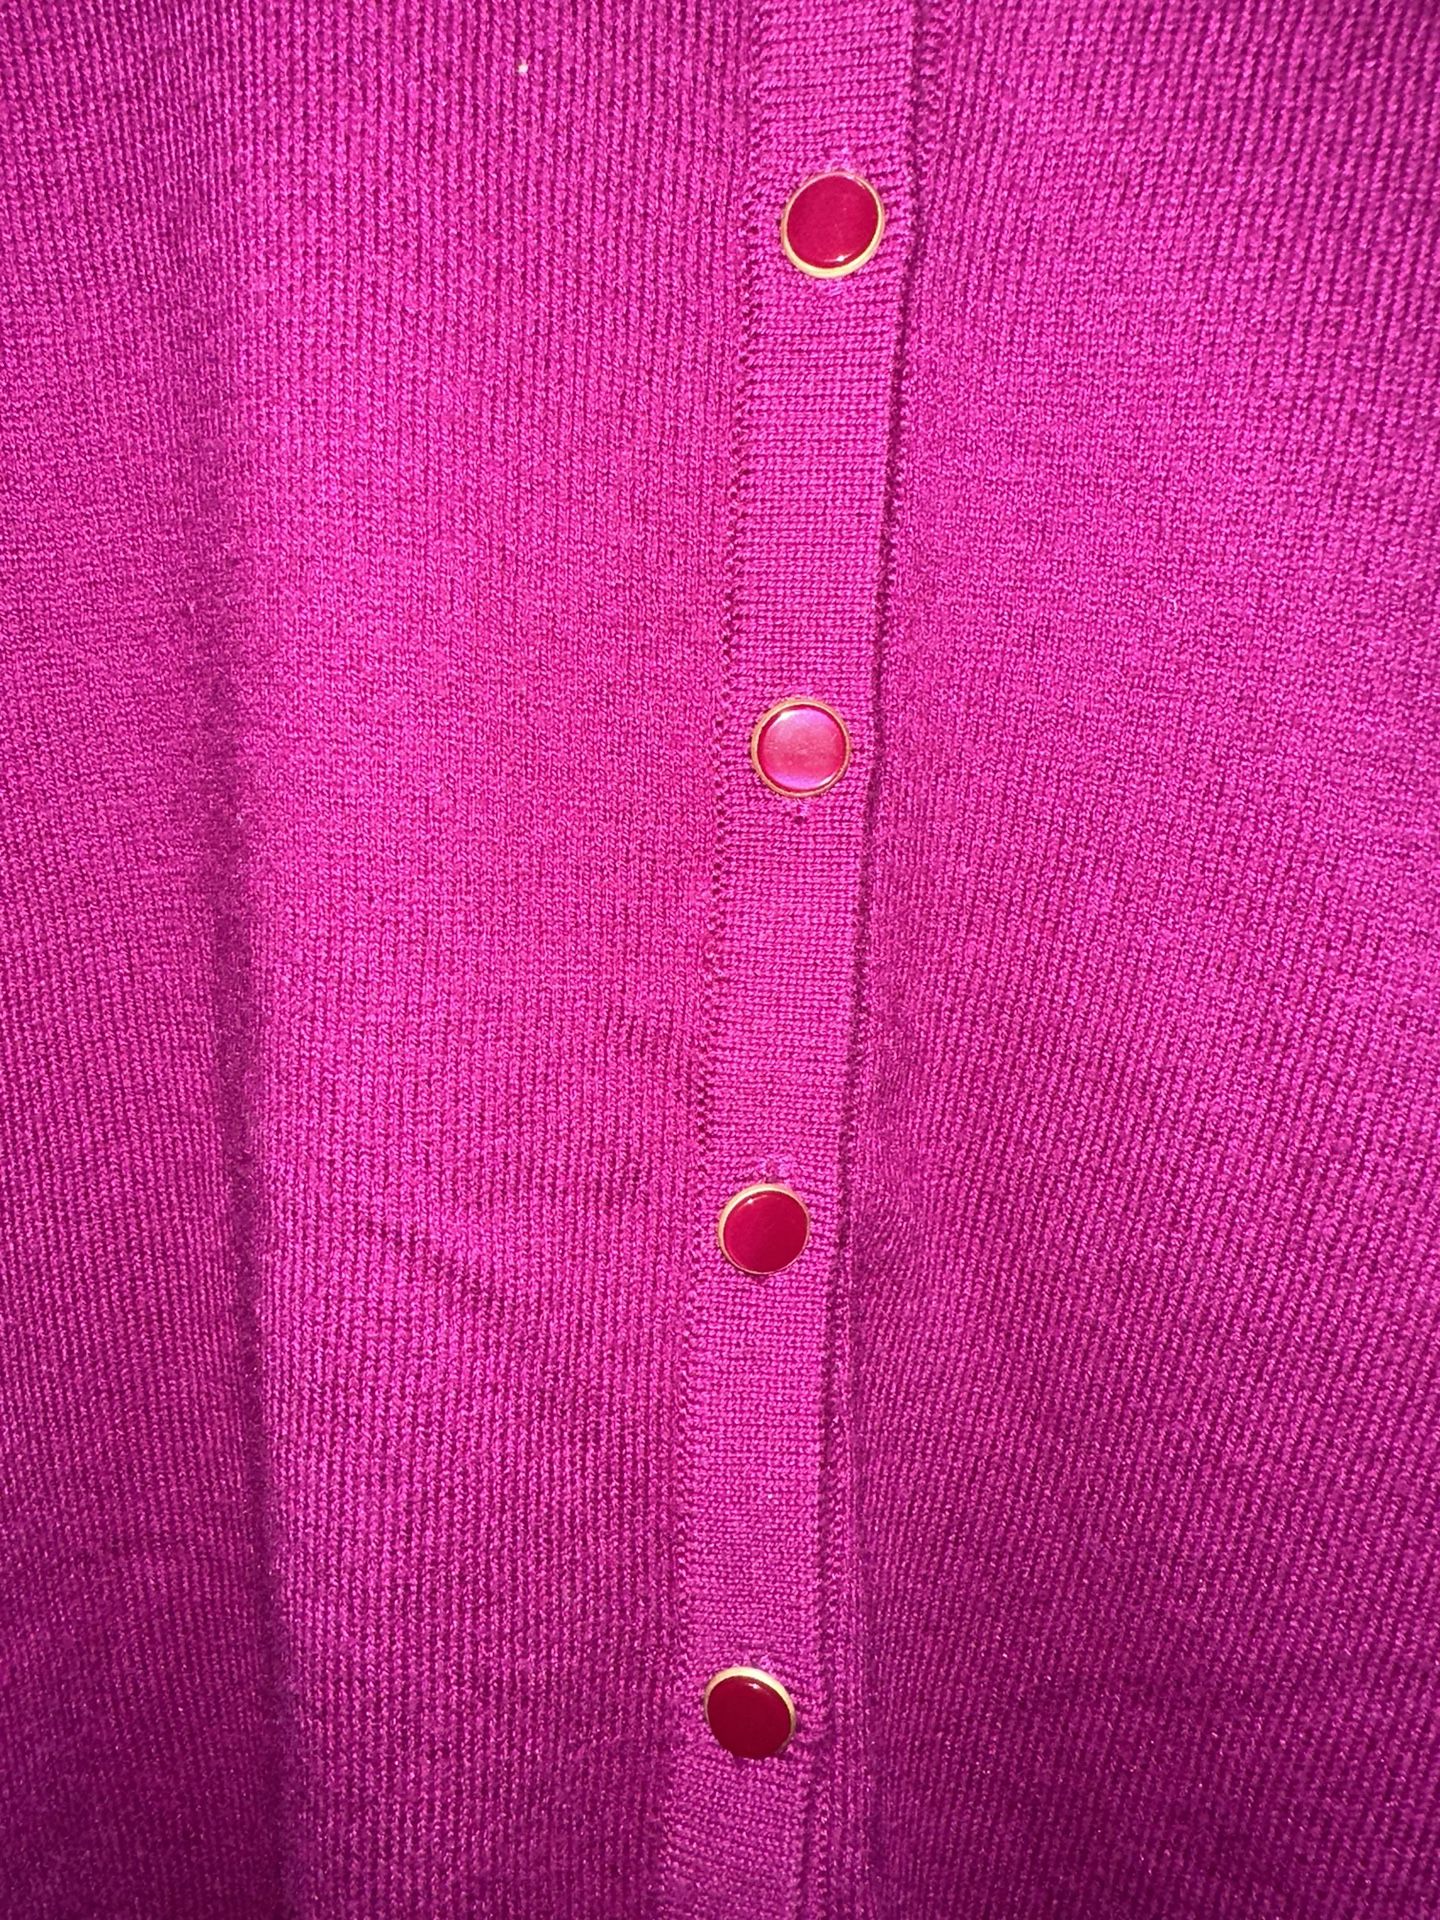 Talbolts Women Cardigan Sweater Fuchsia Size S Petite, Buttons Dressy